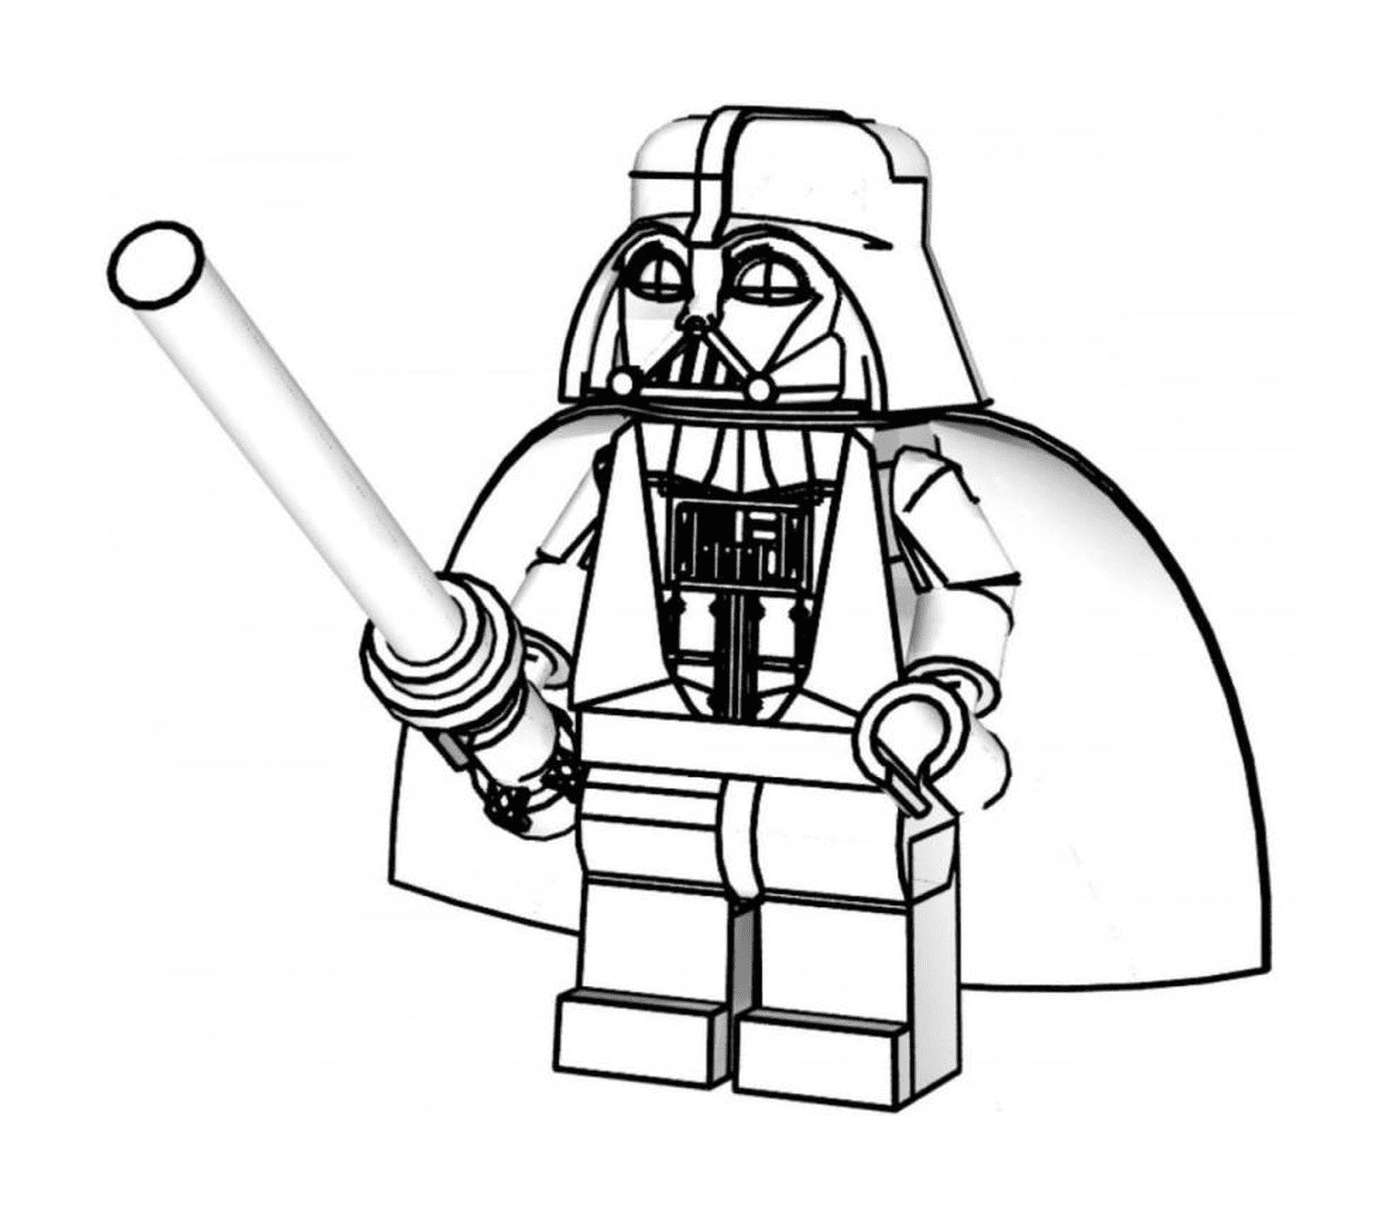   Darth Vader Lego avec une épée 